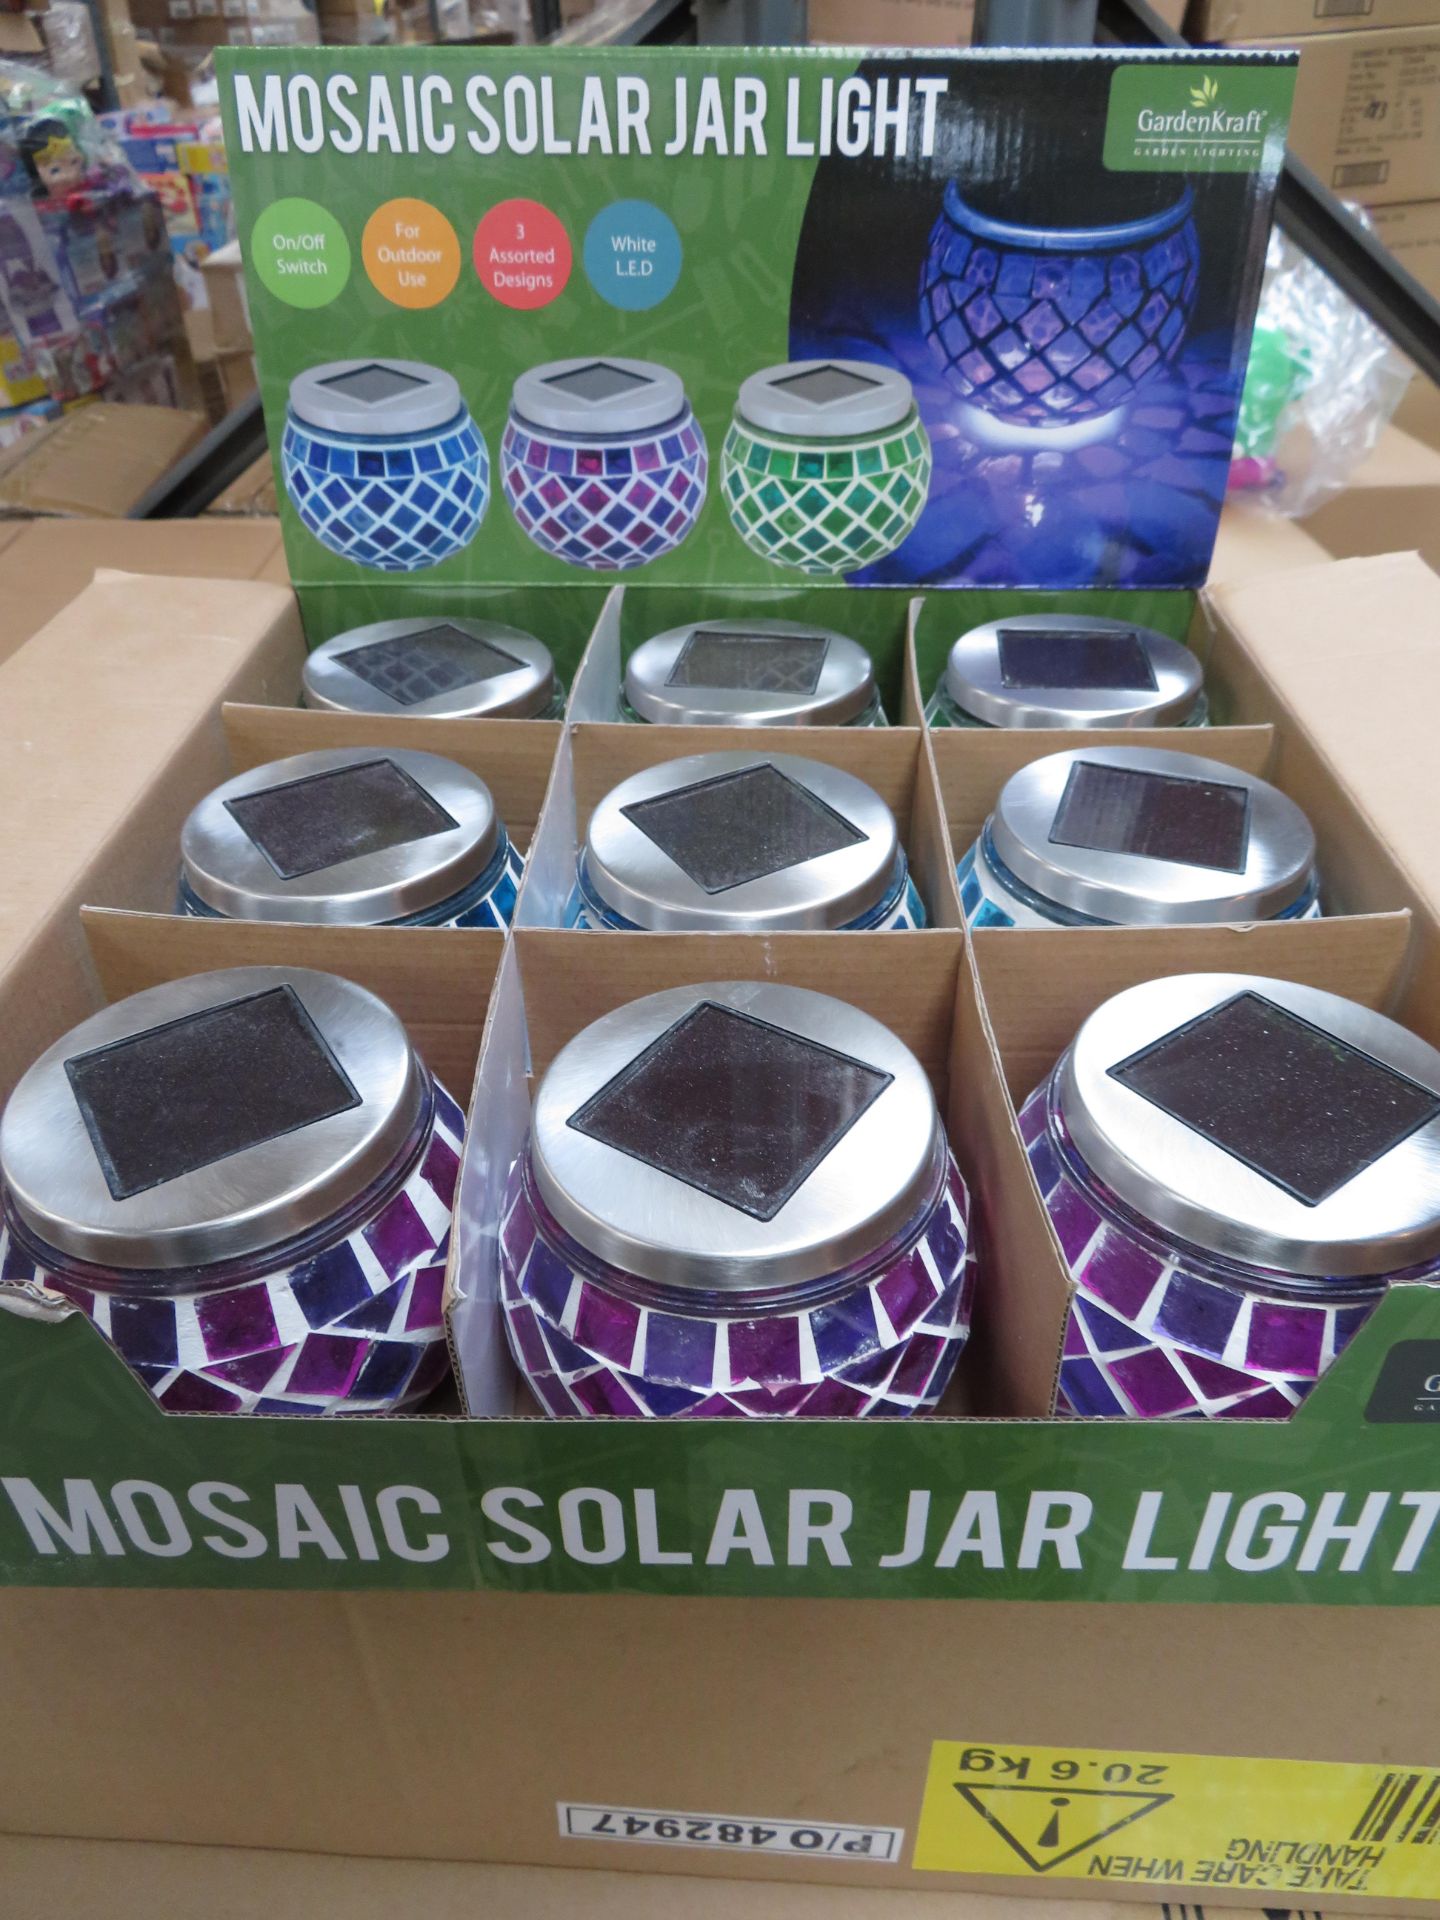 72 x Brand New Garden Kraft Mosaic Solar Jar Lights. On/Off Switch. For Outdoor Use. 3 Assd.